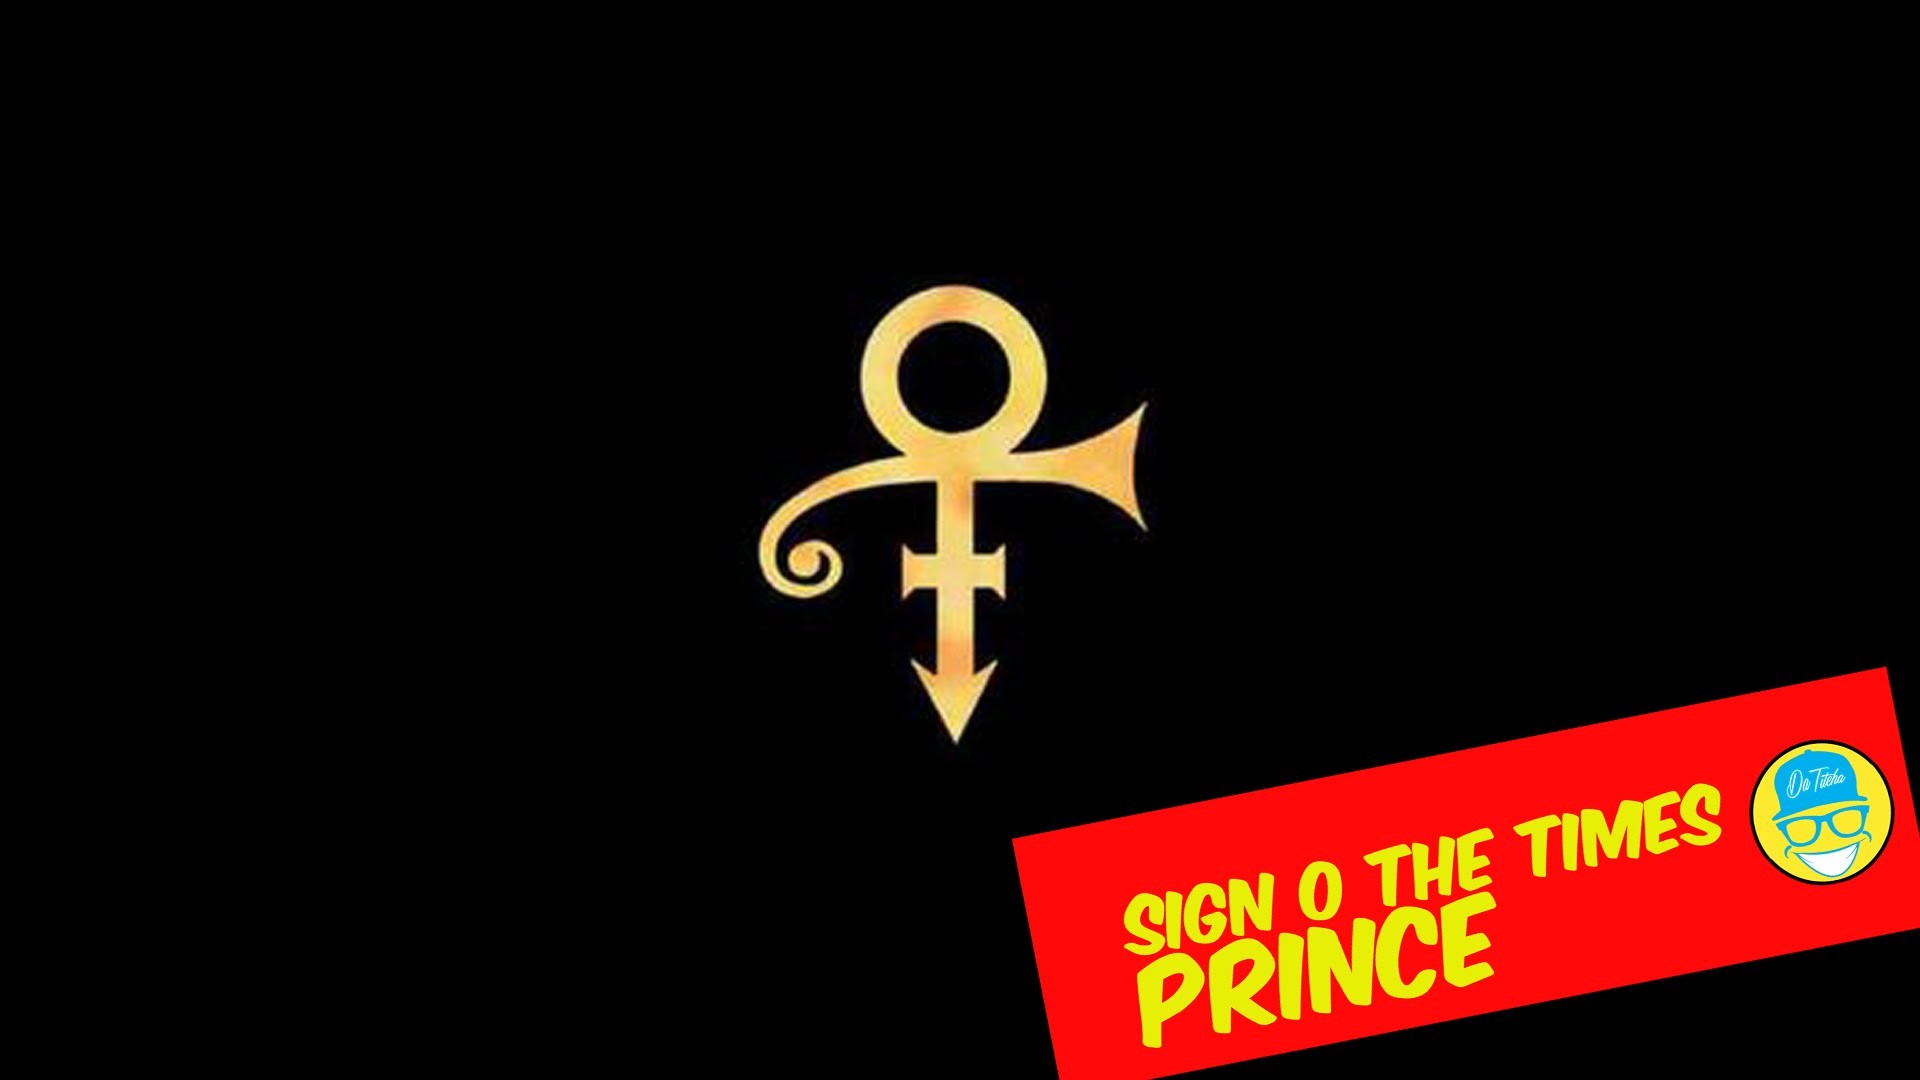 Prince – Sign o the times remix